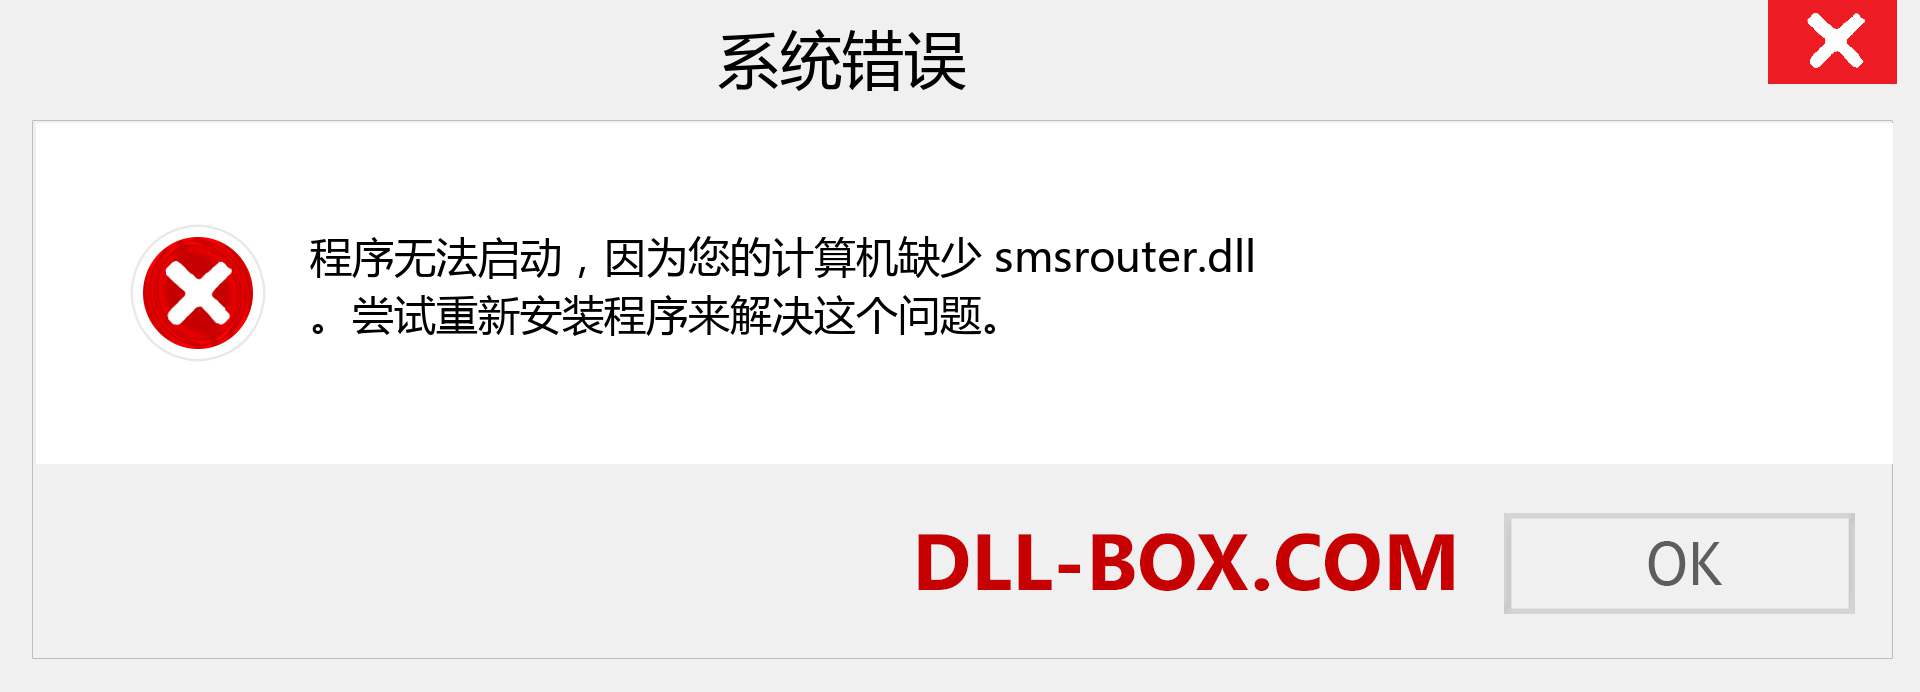 smsrouter.dll 文件丢失？。 适用于 Windows 7、8、10 的下载 - 修复 Windows、照片、图像上的 smsrouter dll 丢失错误